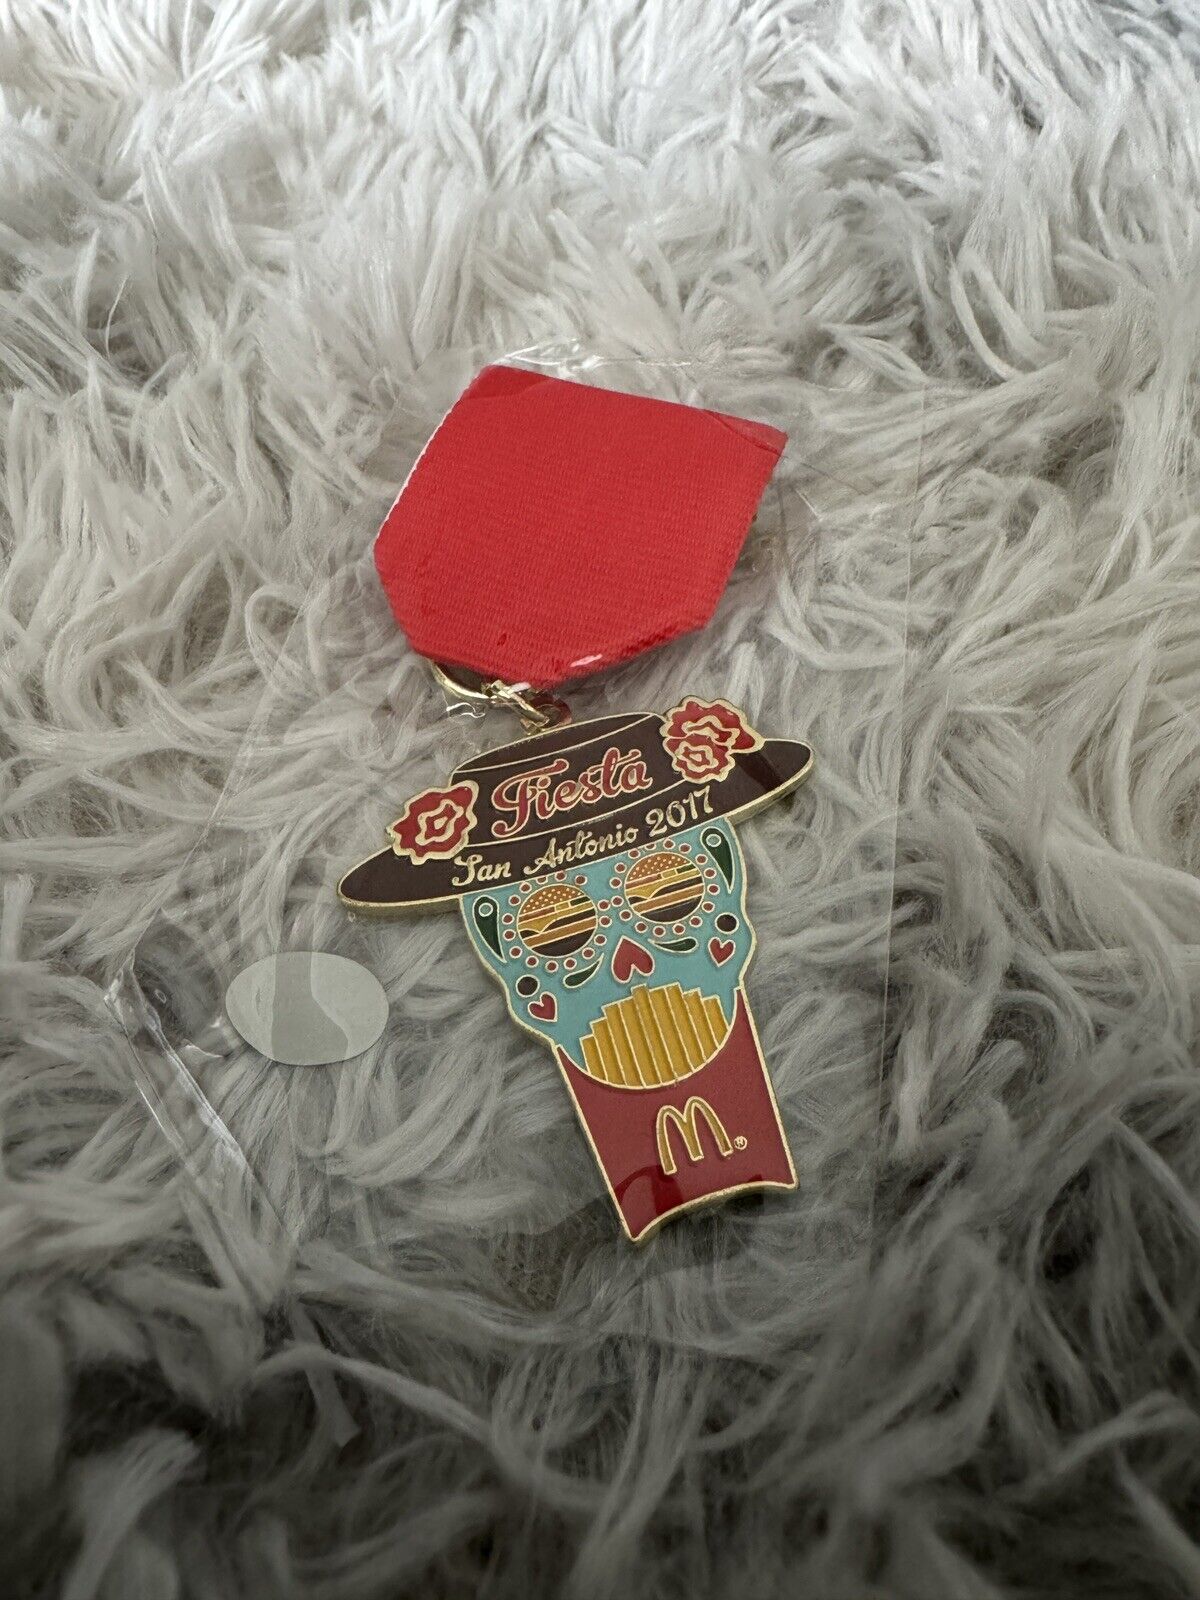 McDonald’s 2017 Fiesta San Antonio Sugar Skull Texas Fiesta Medal RARE VINTAGE